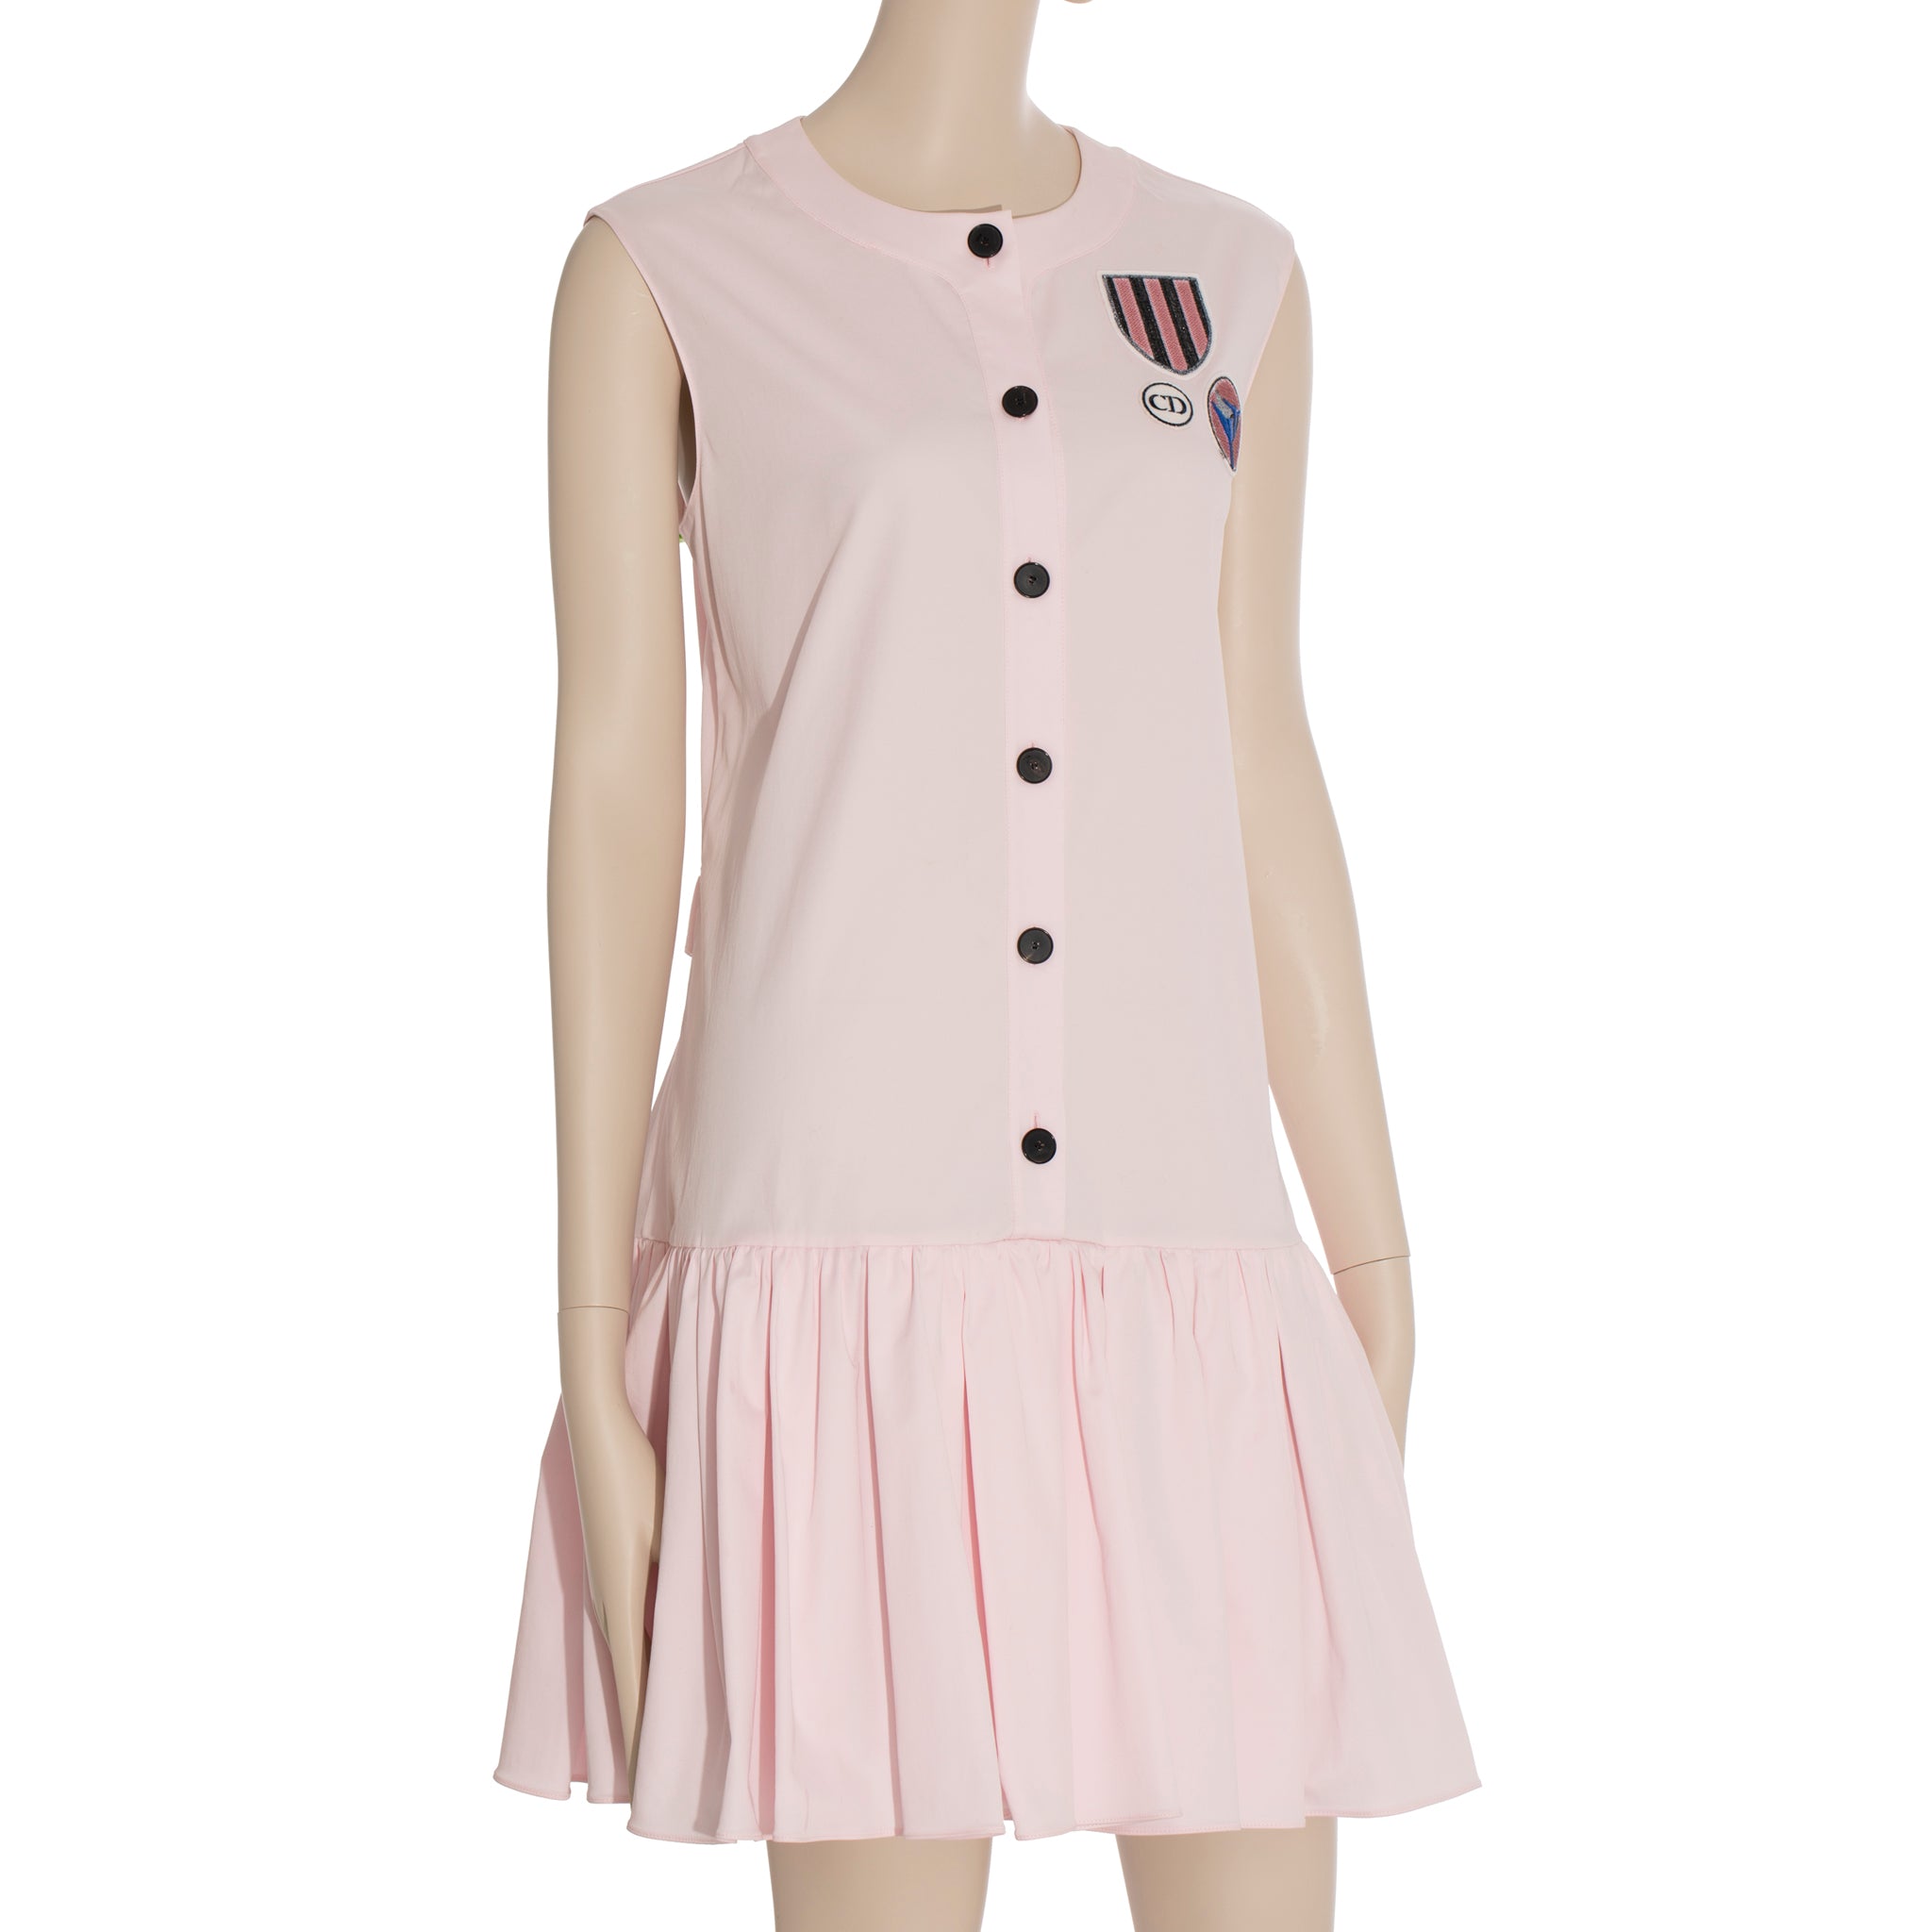 Christian Dior Pink Dress Size 42 FR